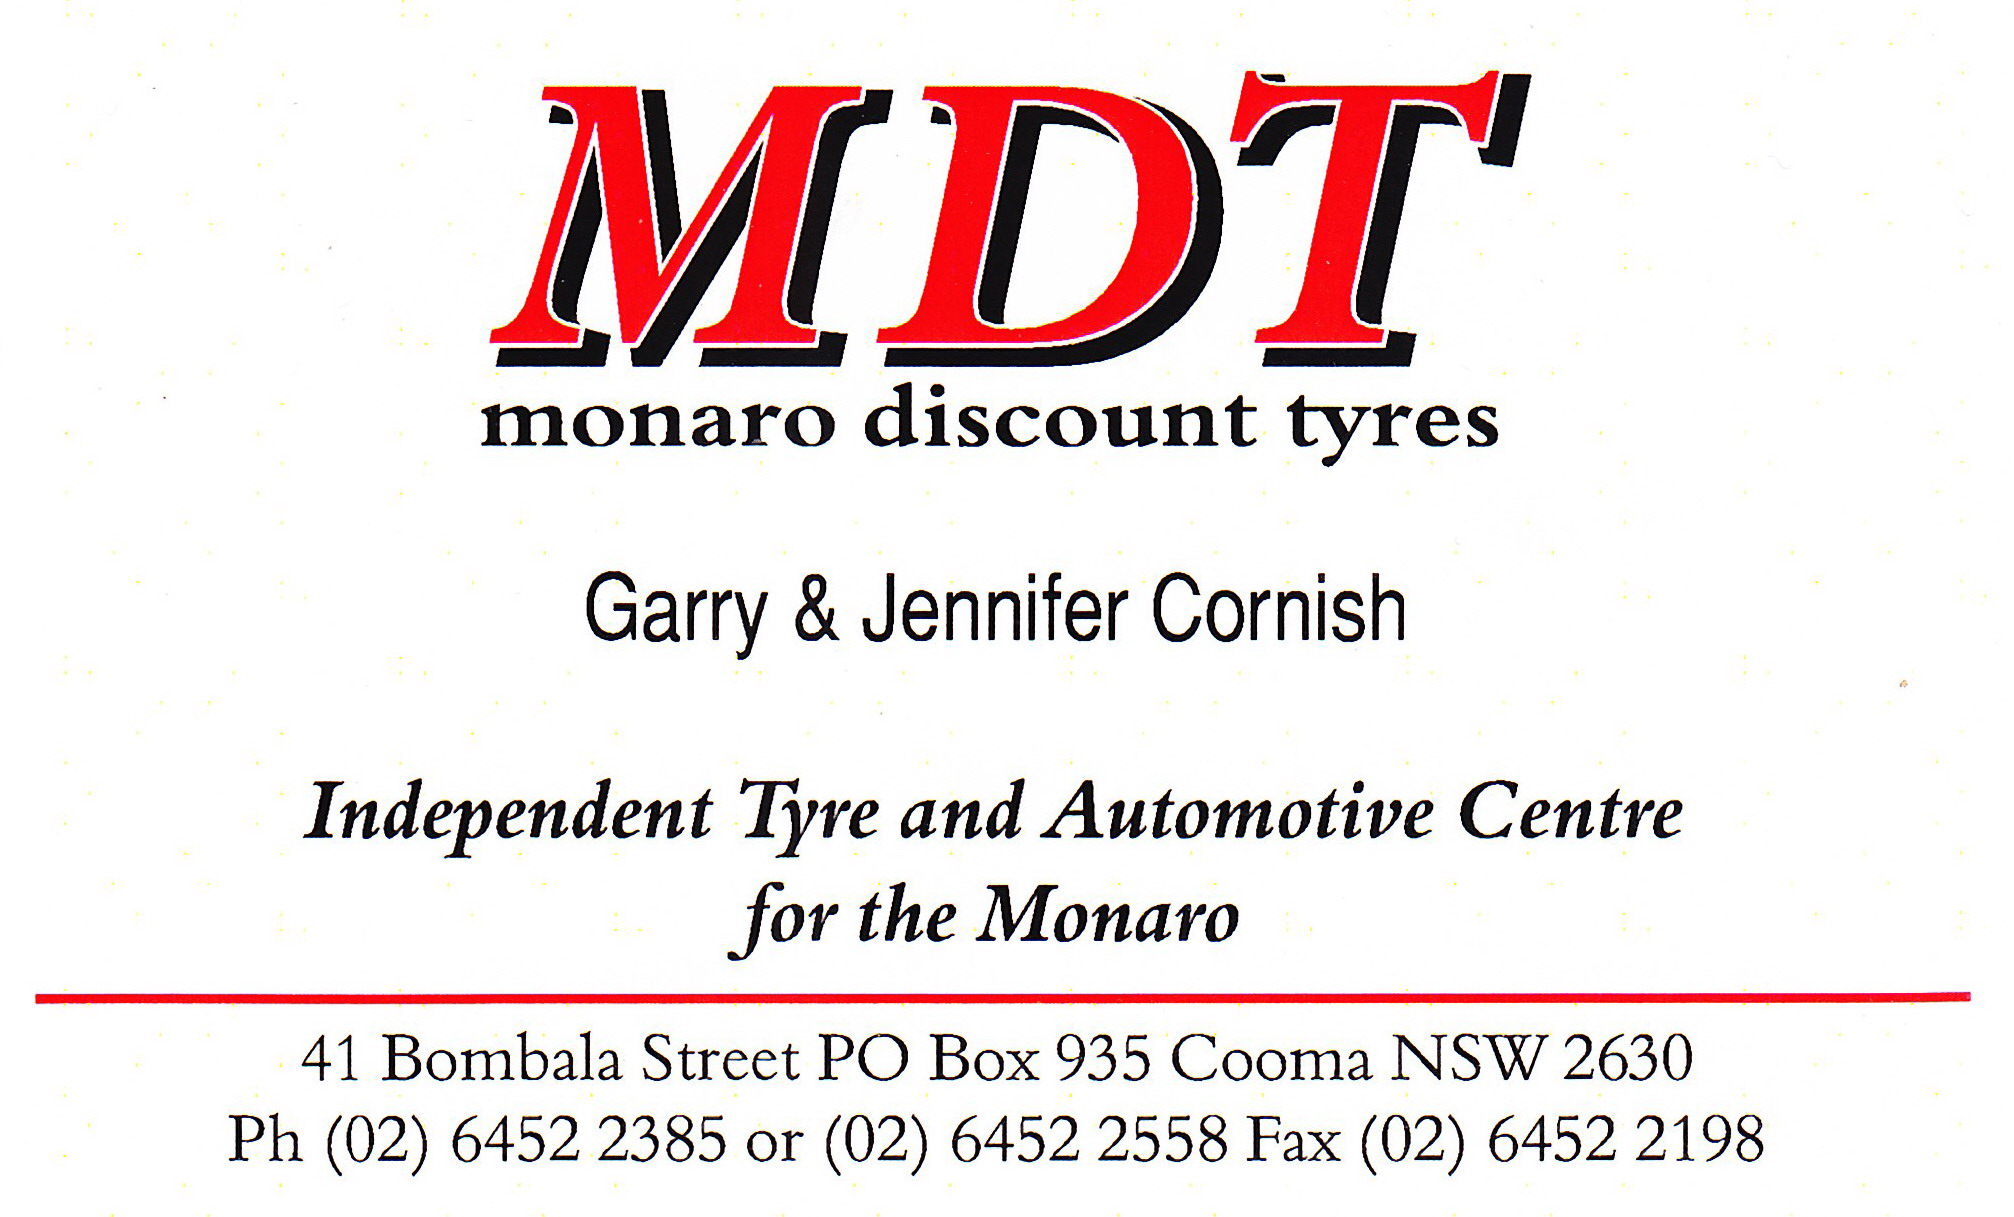 Monaro Discount tyres logo.jpg